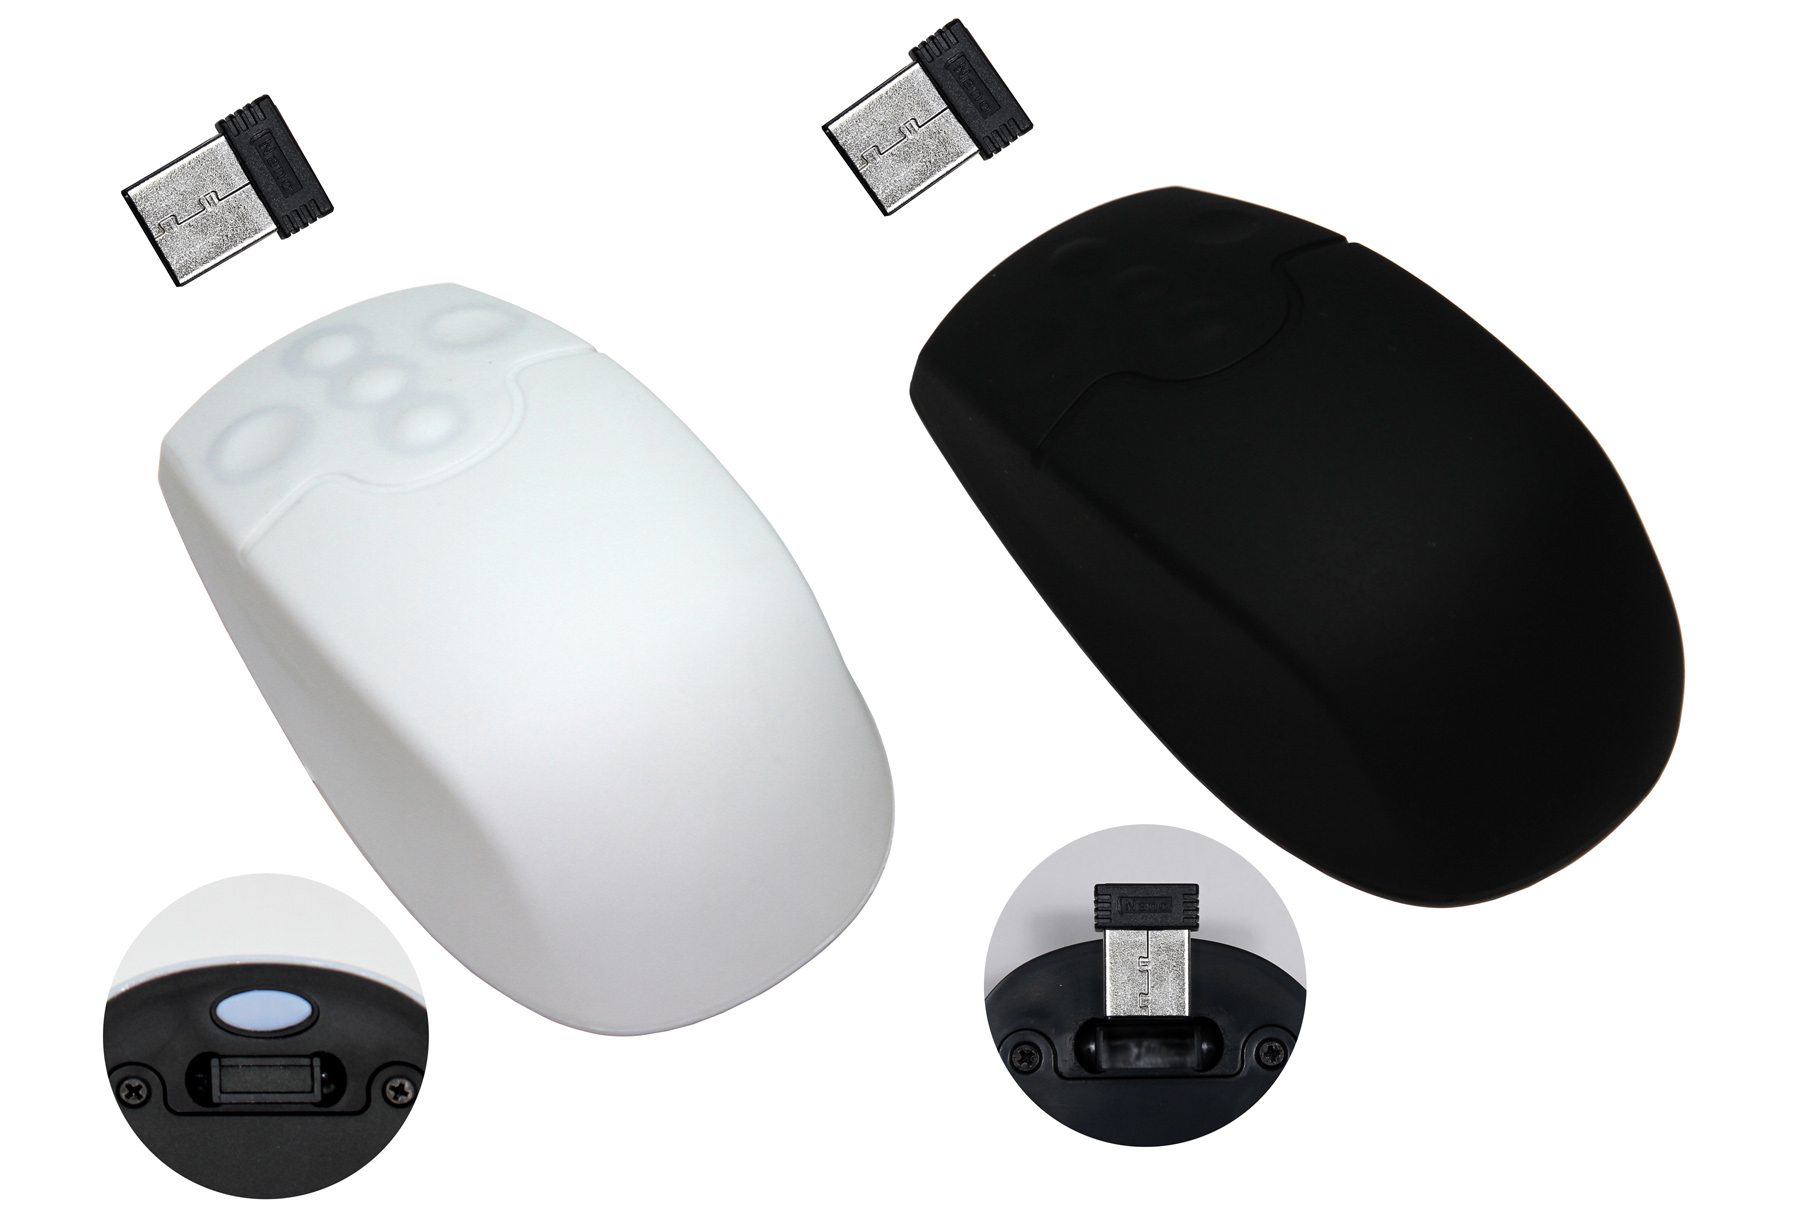 Беспроводная мышь Wireless Mouse 2/4ghz Wireless Technology. 2.4 GHZ Wireless флешка. Беспроводная оптическая мышь 360 6d гироскоп. Мышь ip68.